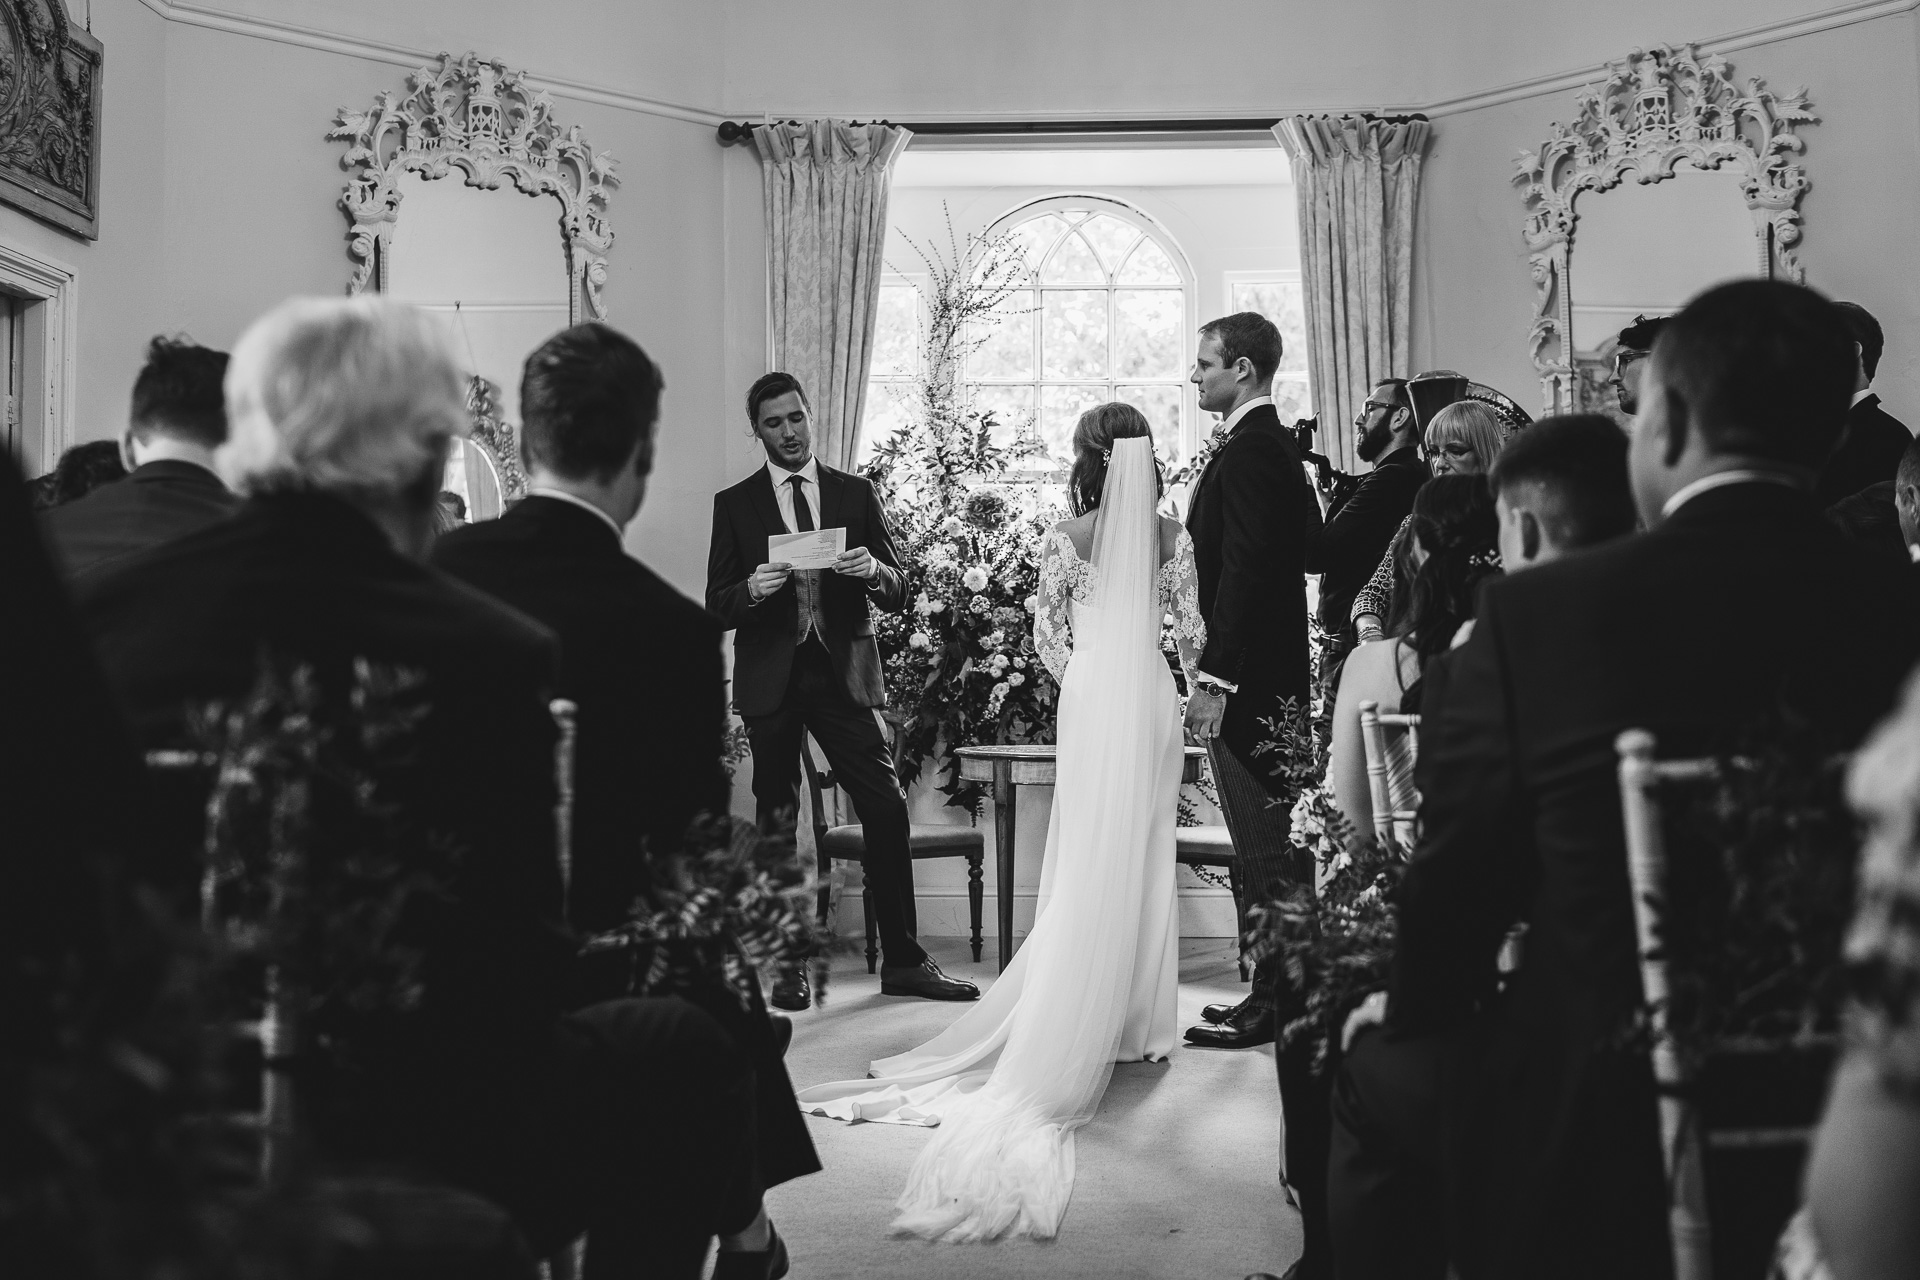 Wedding ceremony at Pennard House